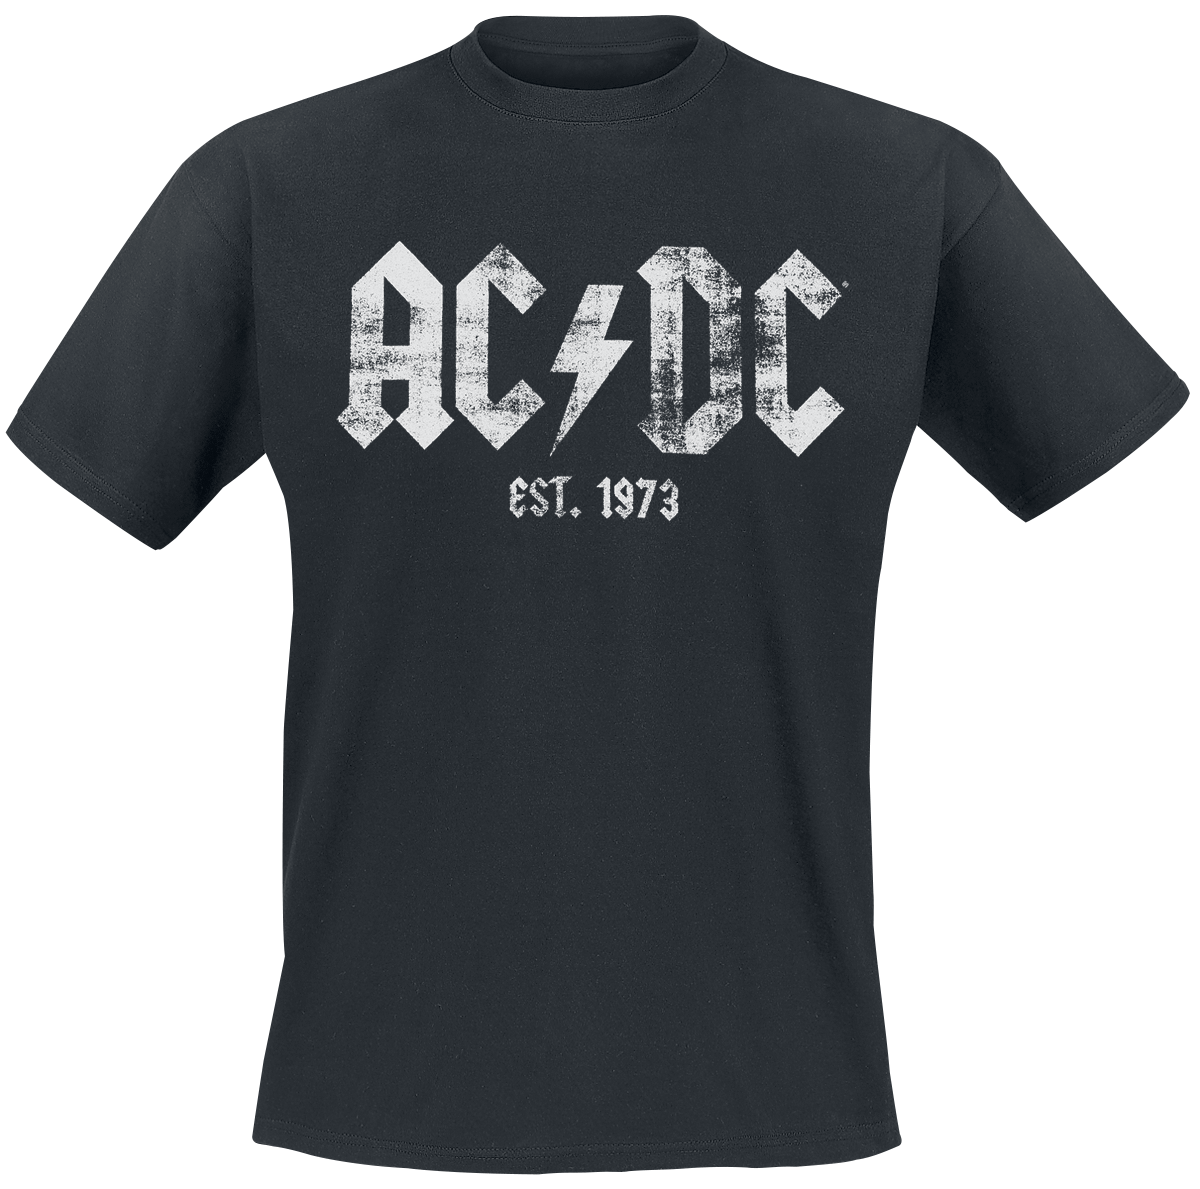 AC/DC - Est 1973 - T-Shirt - schwarz